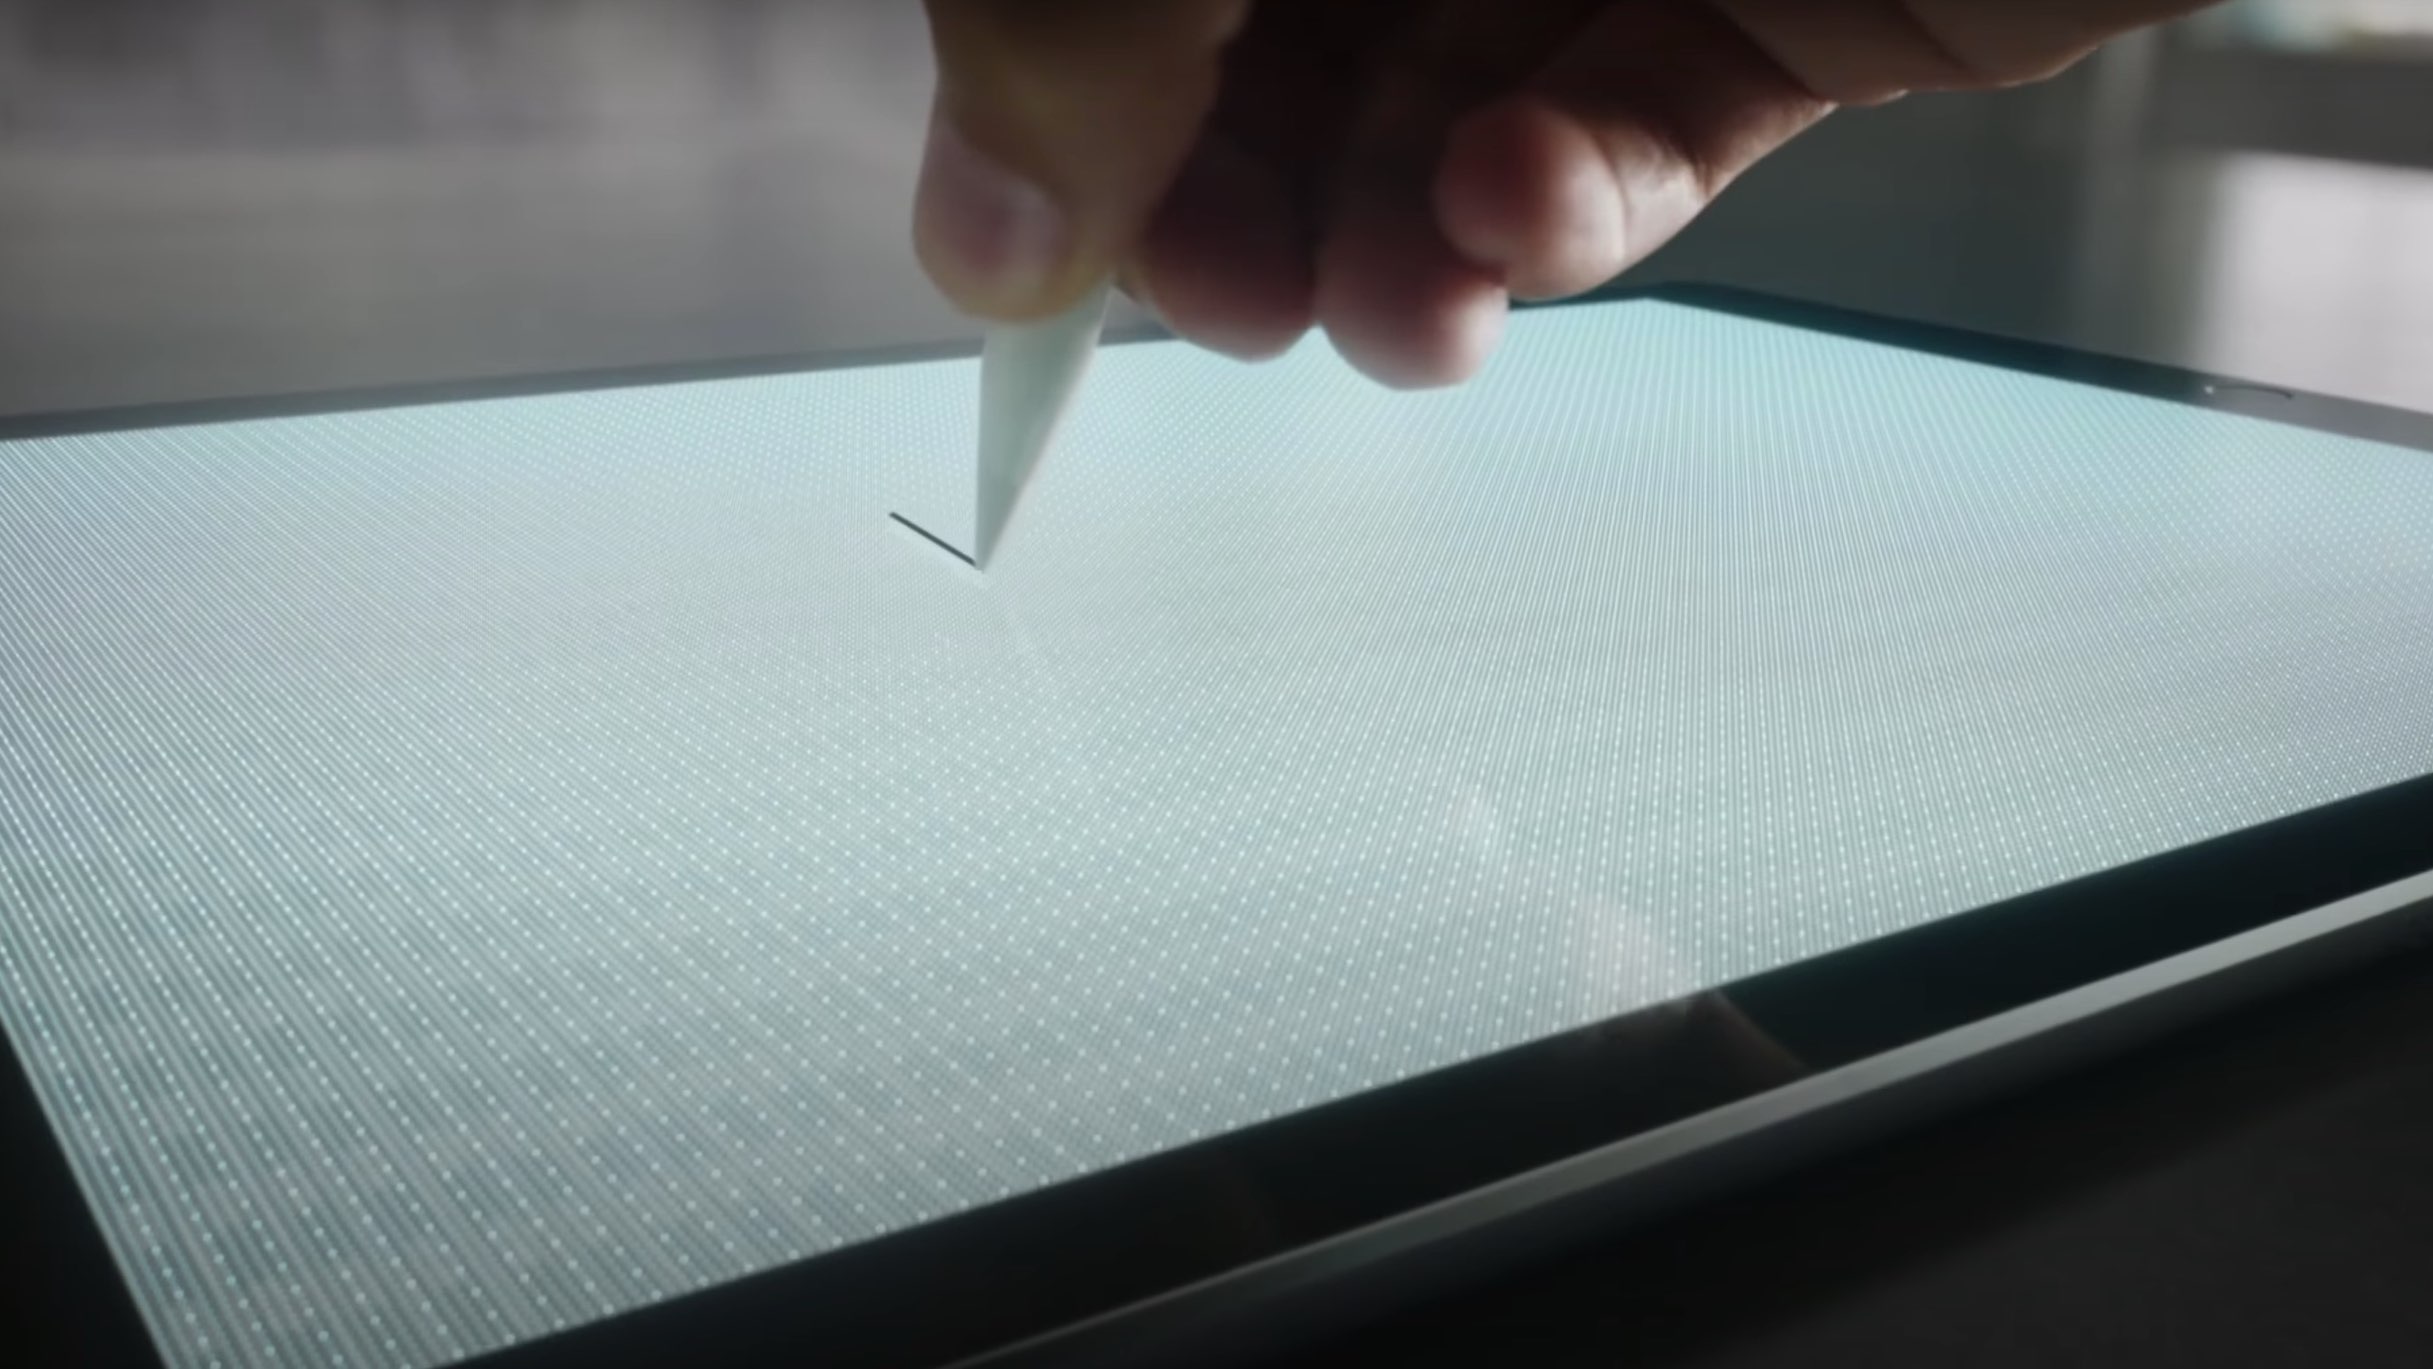 Apple Pencil 1st Generation on a pixelated iPad